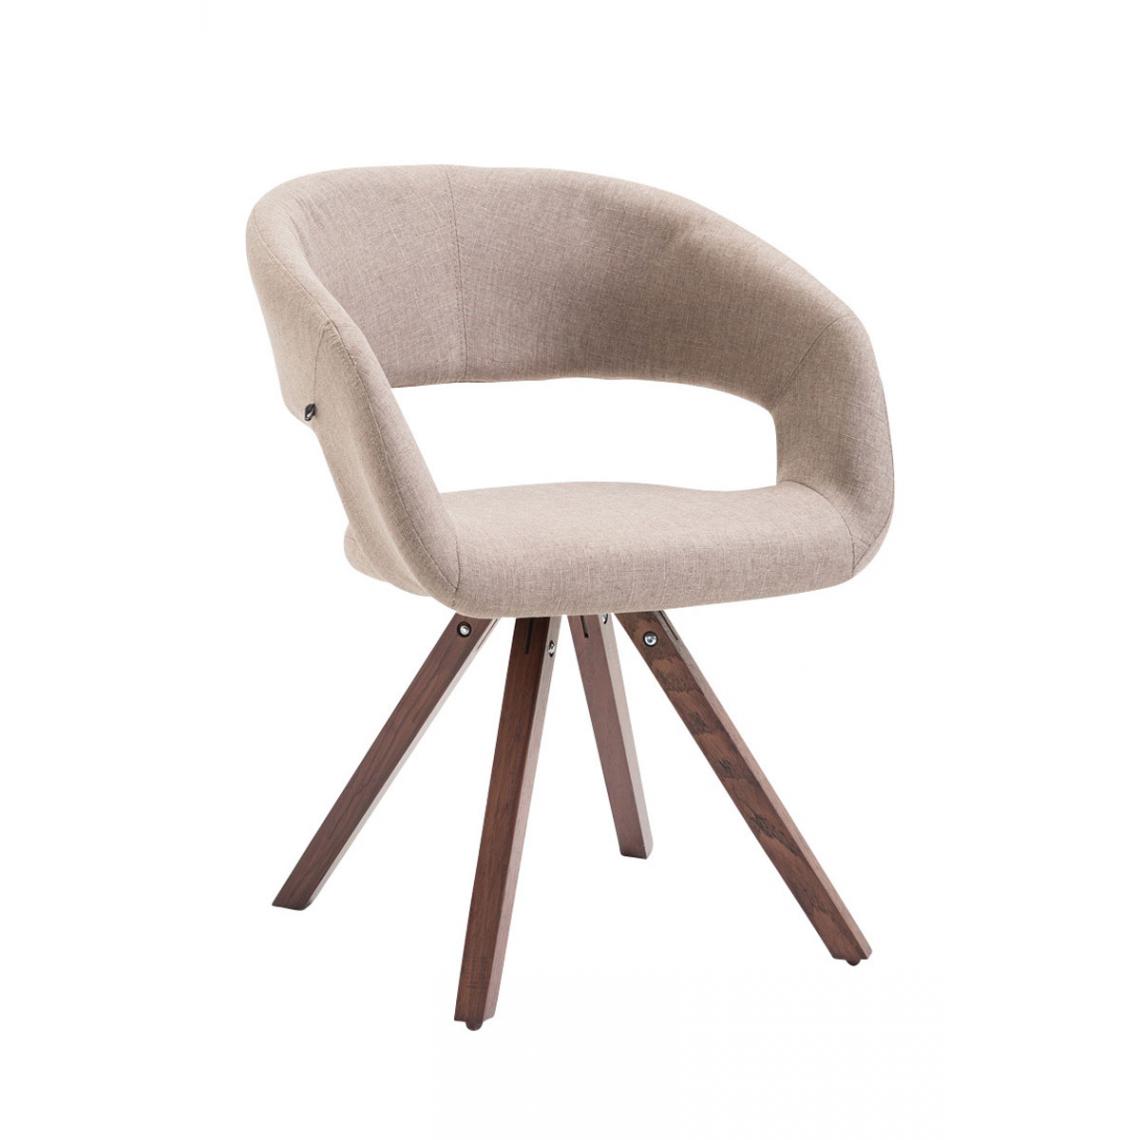 Icaverne - Moderne Chaise de salle à manger ligne Asmara tissu noyer couleur taupe - Chaises